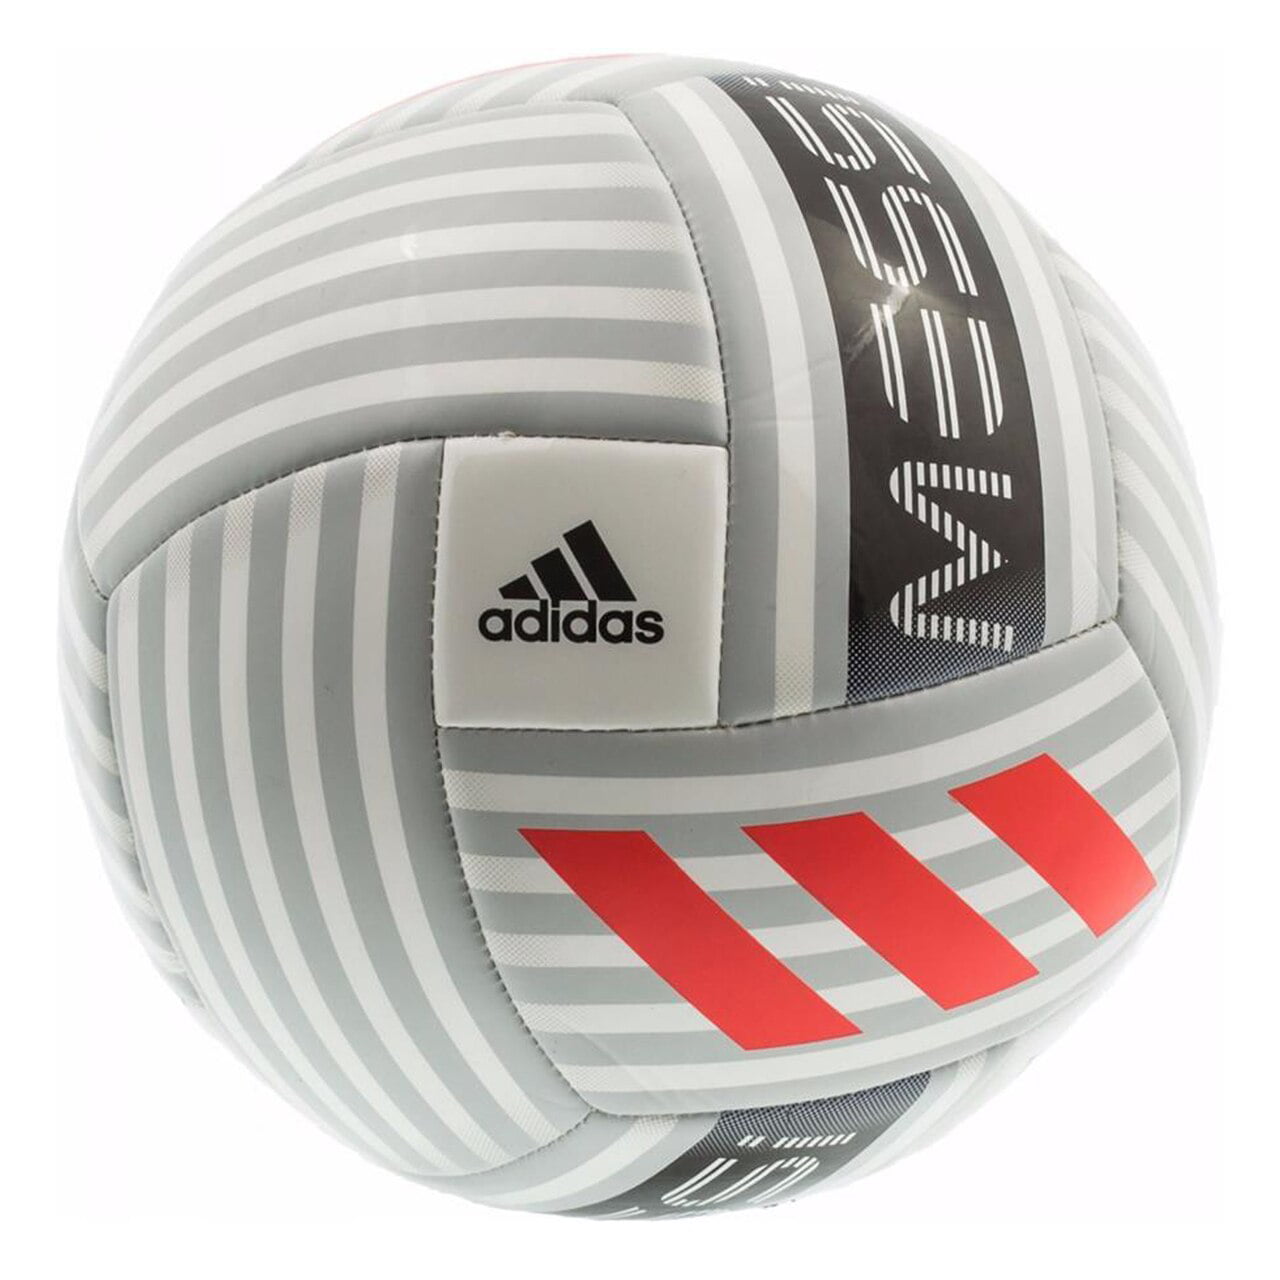 Adidas Messi Glider Soccer Ball BQ1369 